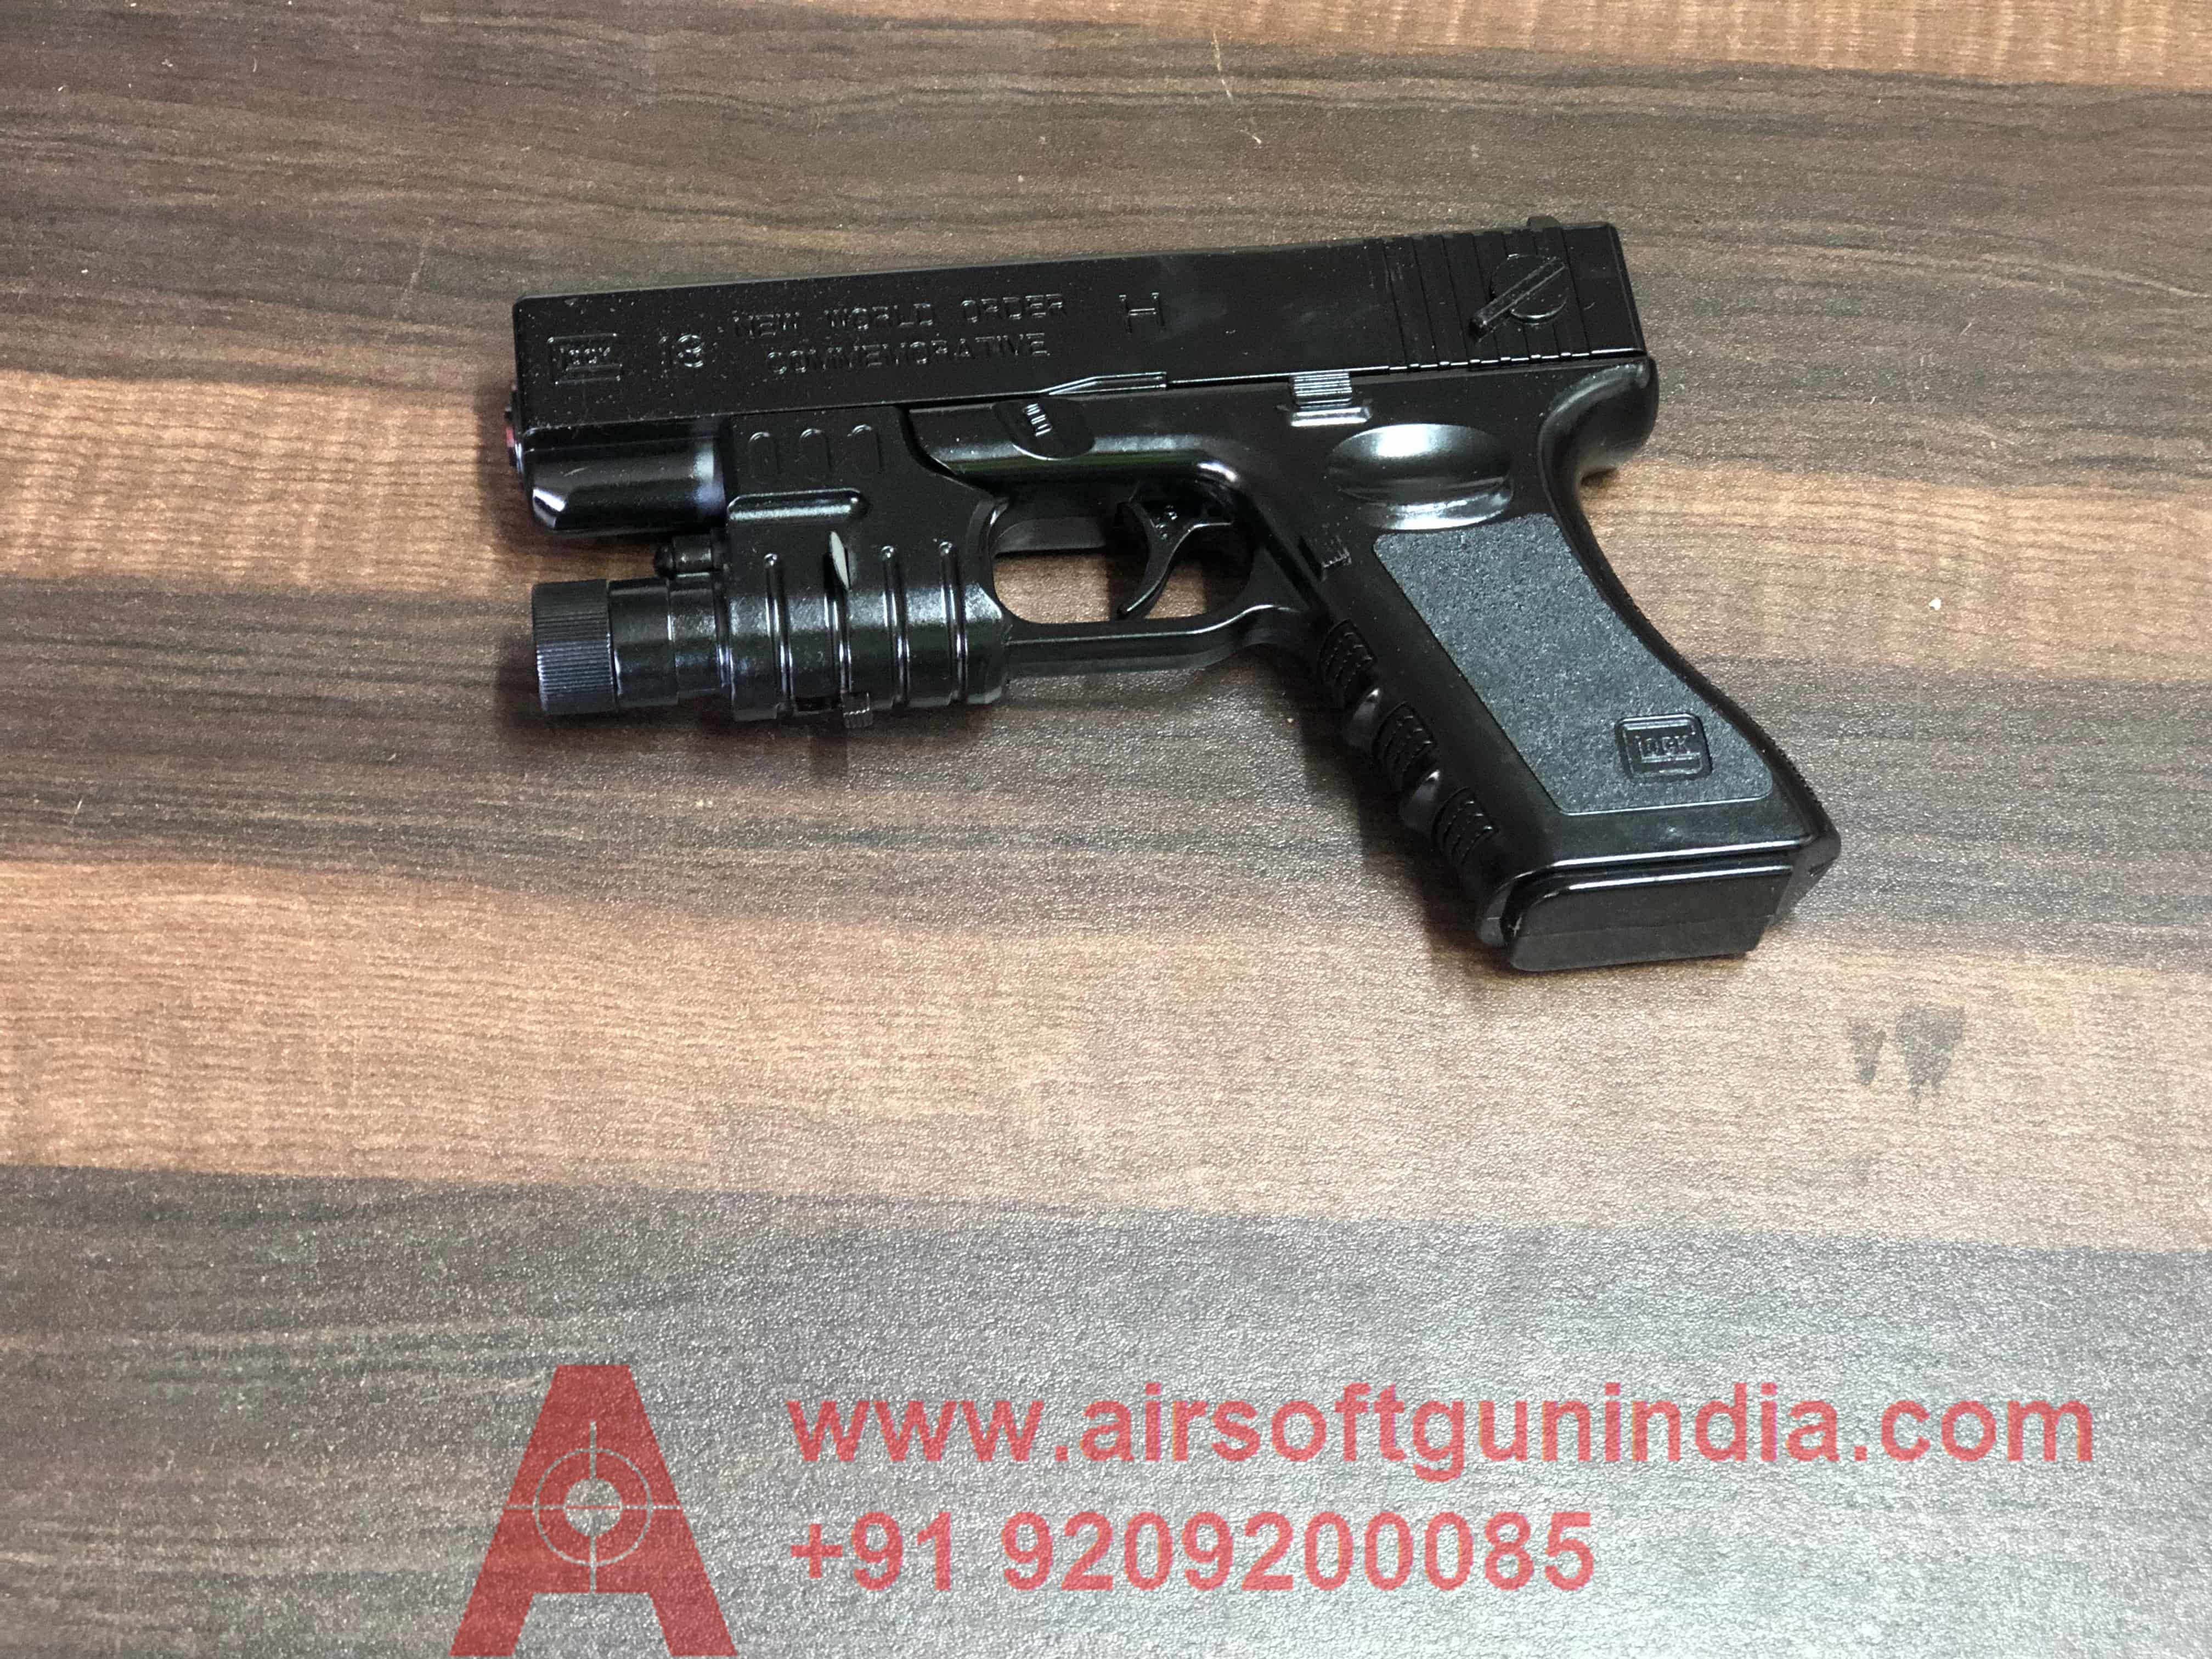 Glock 17 Spring Airsoft Pistol By Airsoft Gun India